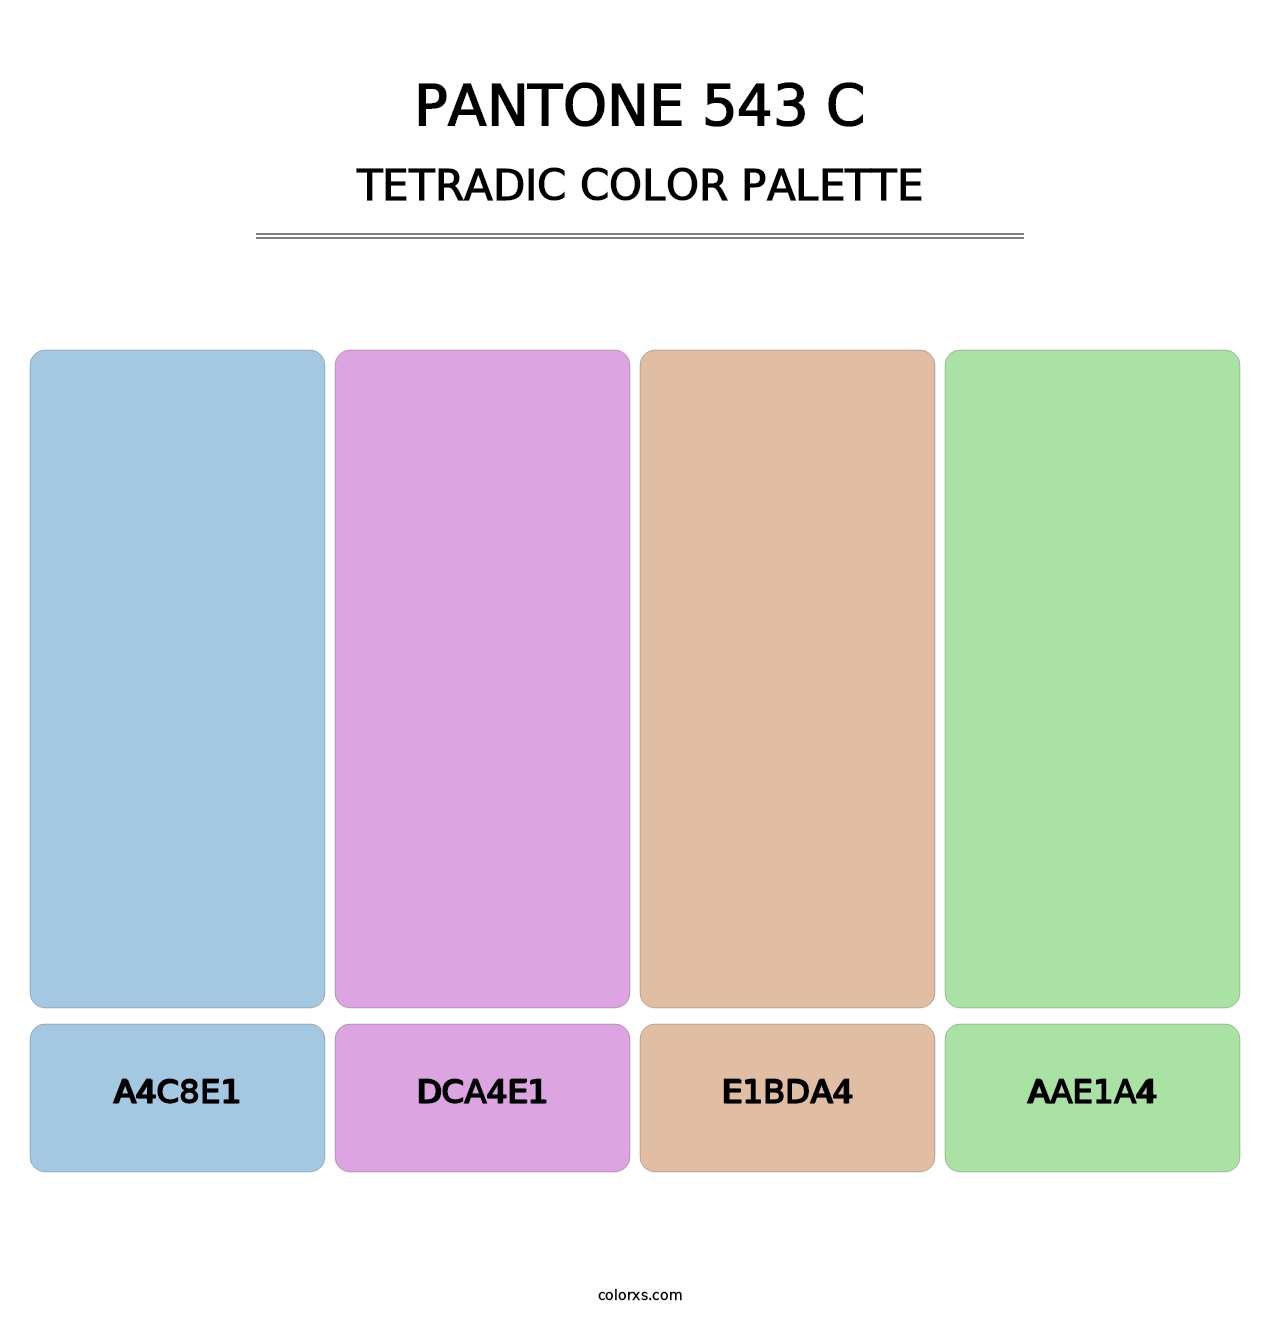 PANTONE 543 C - Tetradic Color Palette